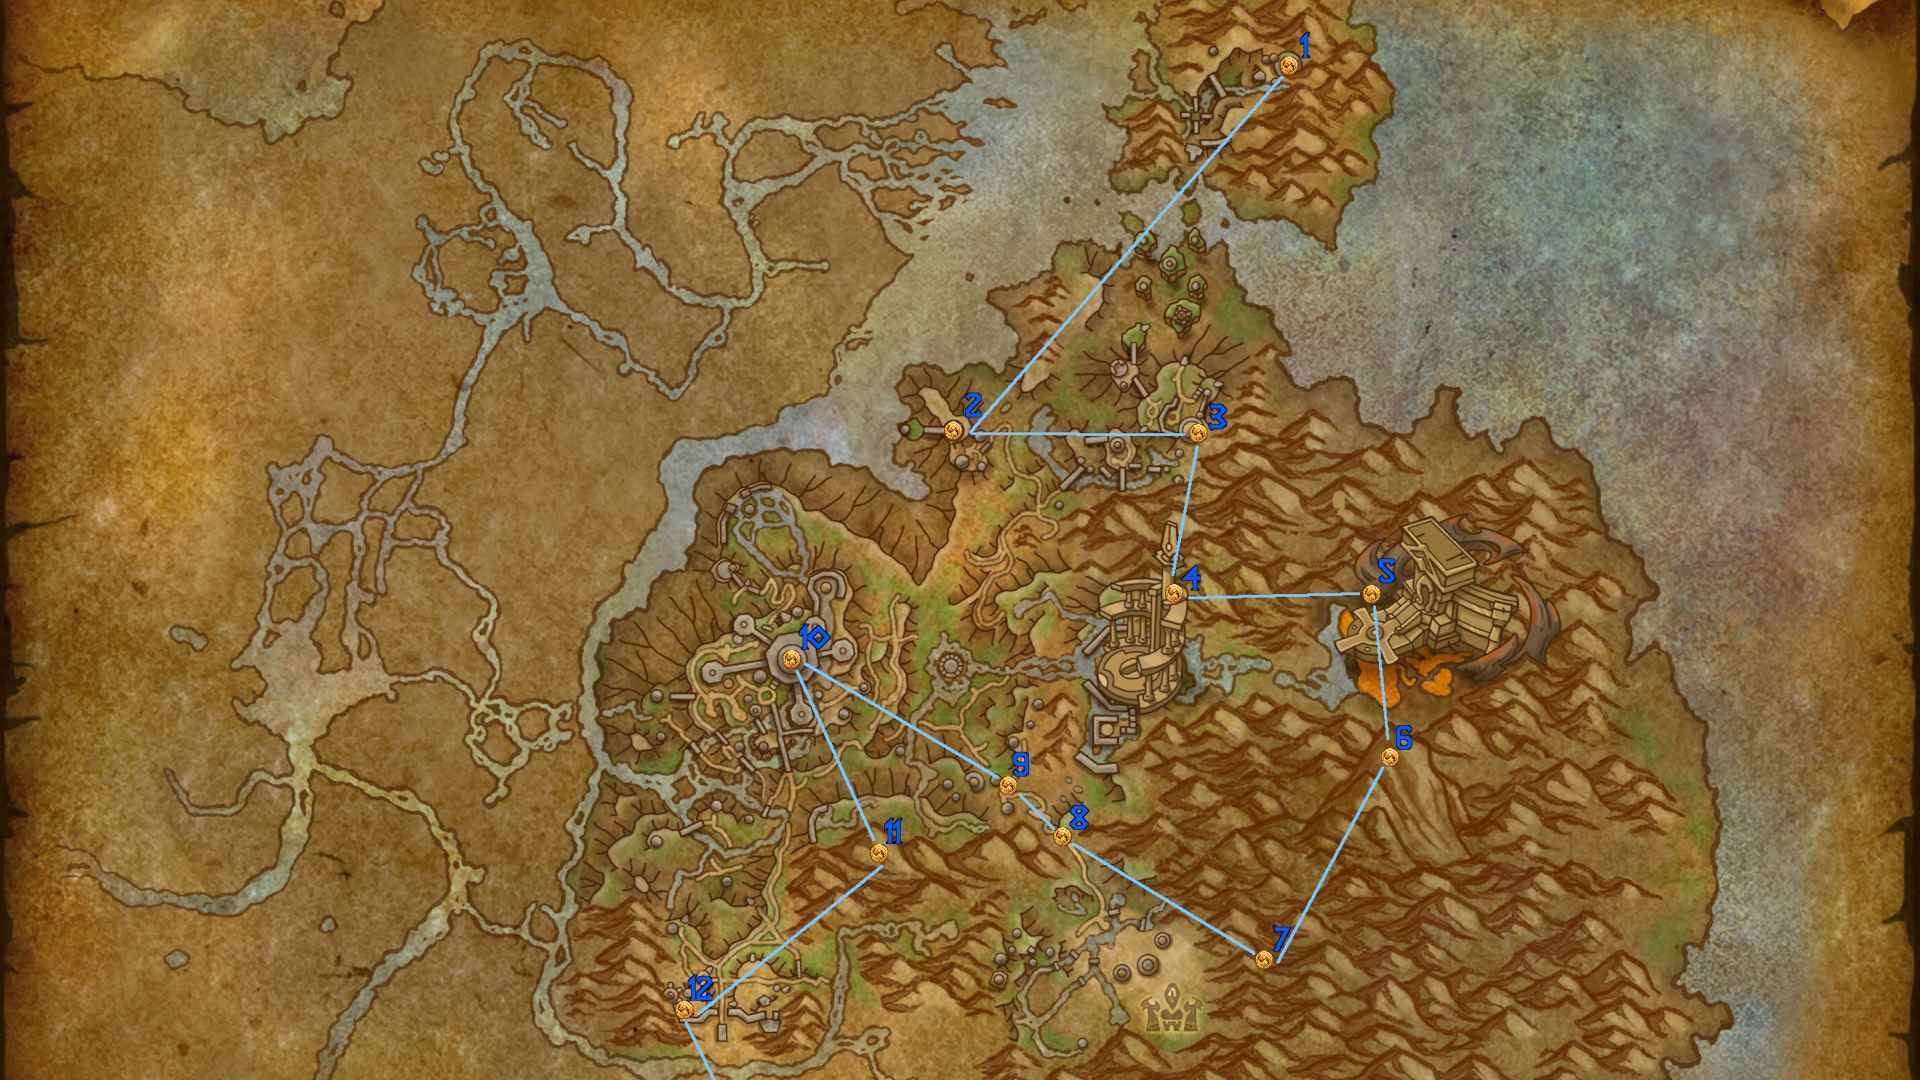 Thaldraszus'un World of Warcraft Dragonflight haritası, Dragon Gliflerini vurgulayan raptiyelerle